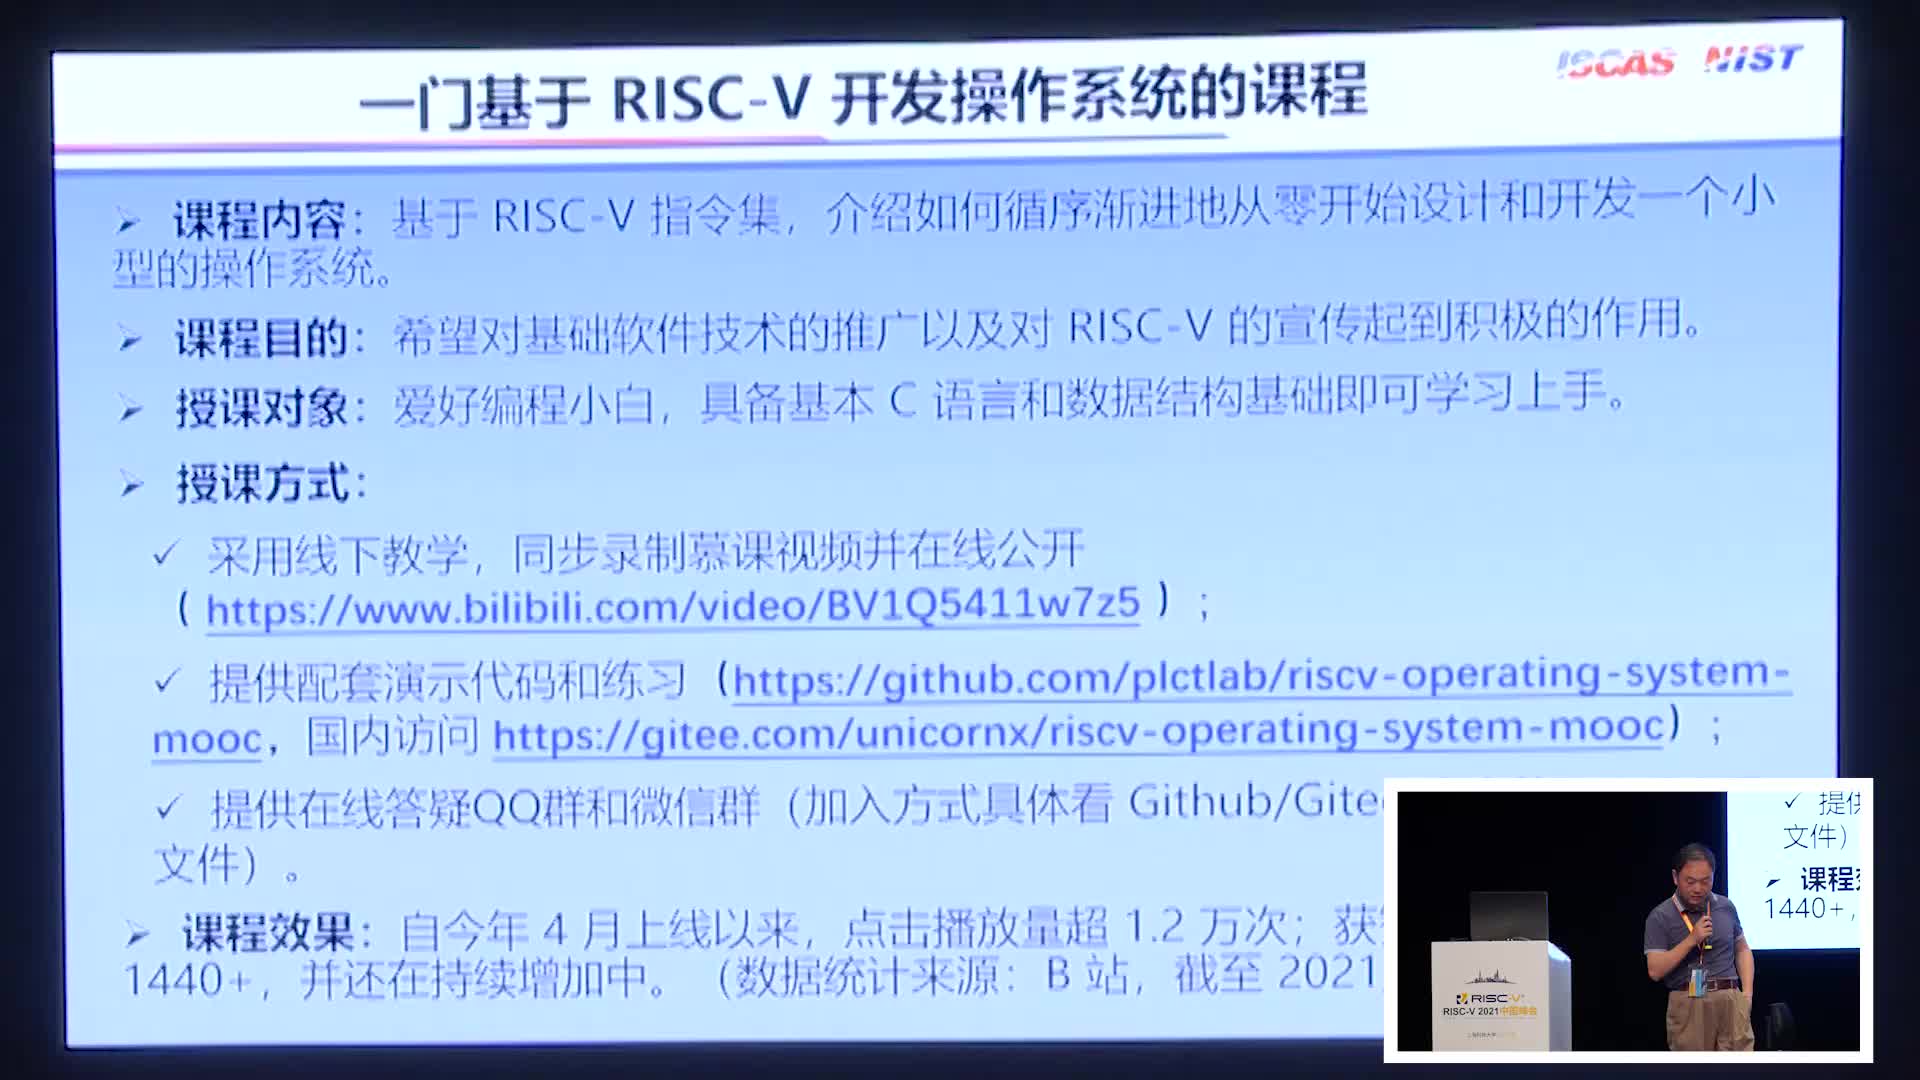 POSTER - 基于 RISC-V 设计一门开发操作系统的入门课程 - 汪辰 - 第一届 RISC-V 